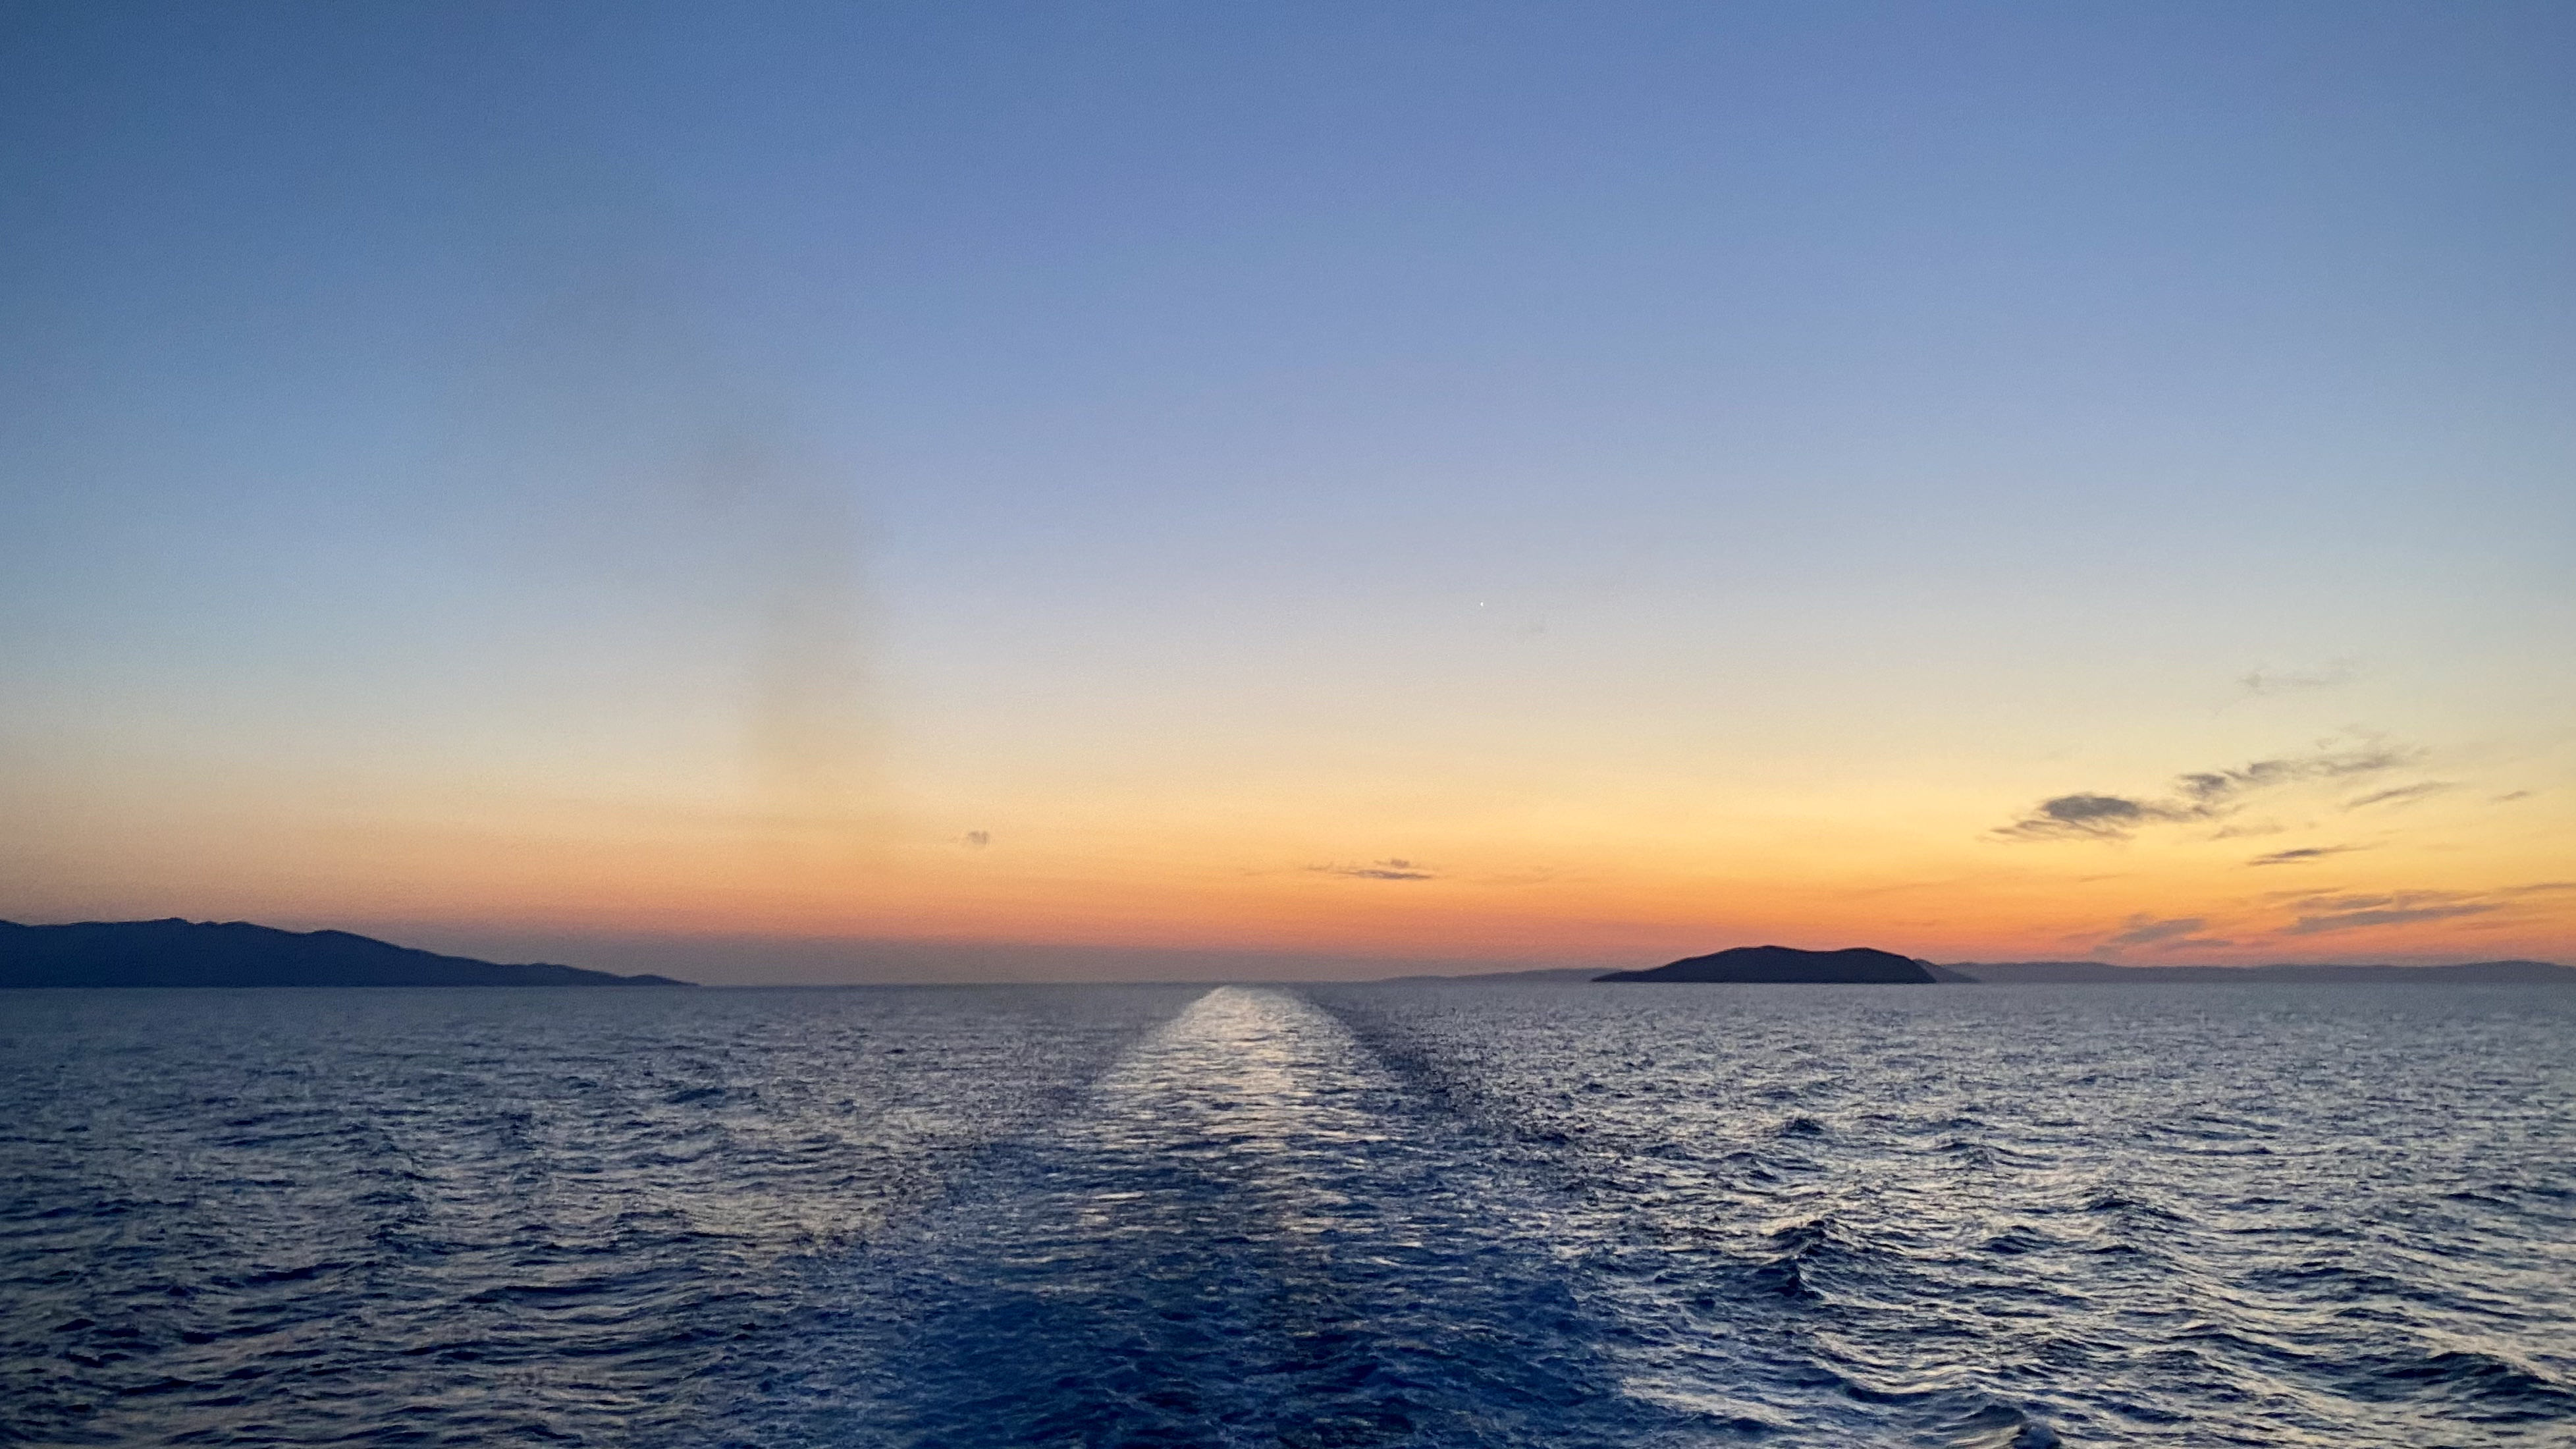 Sailing to Paros from Pirades